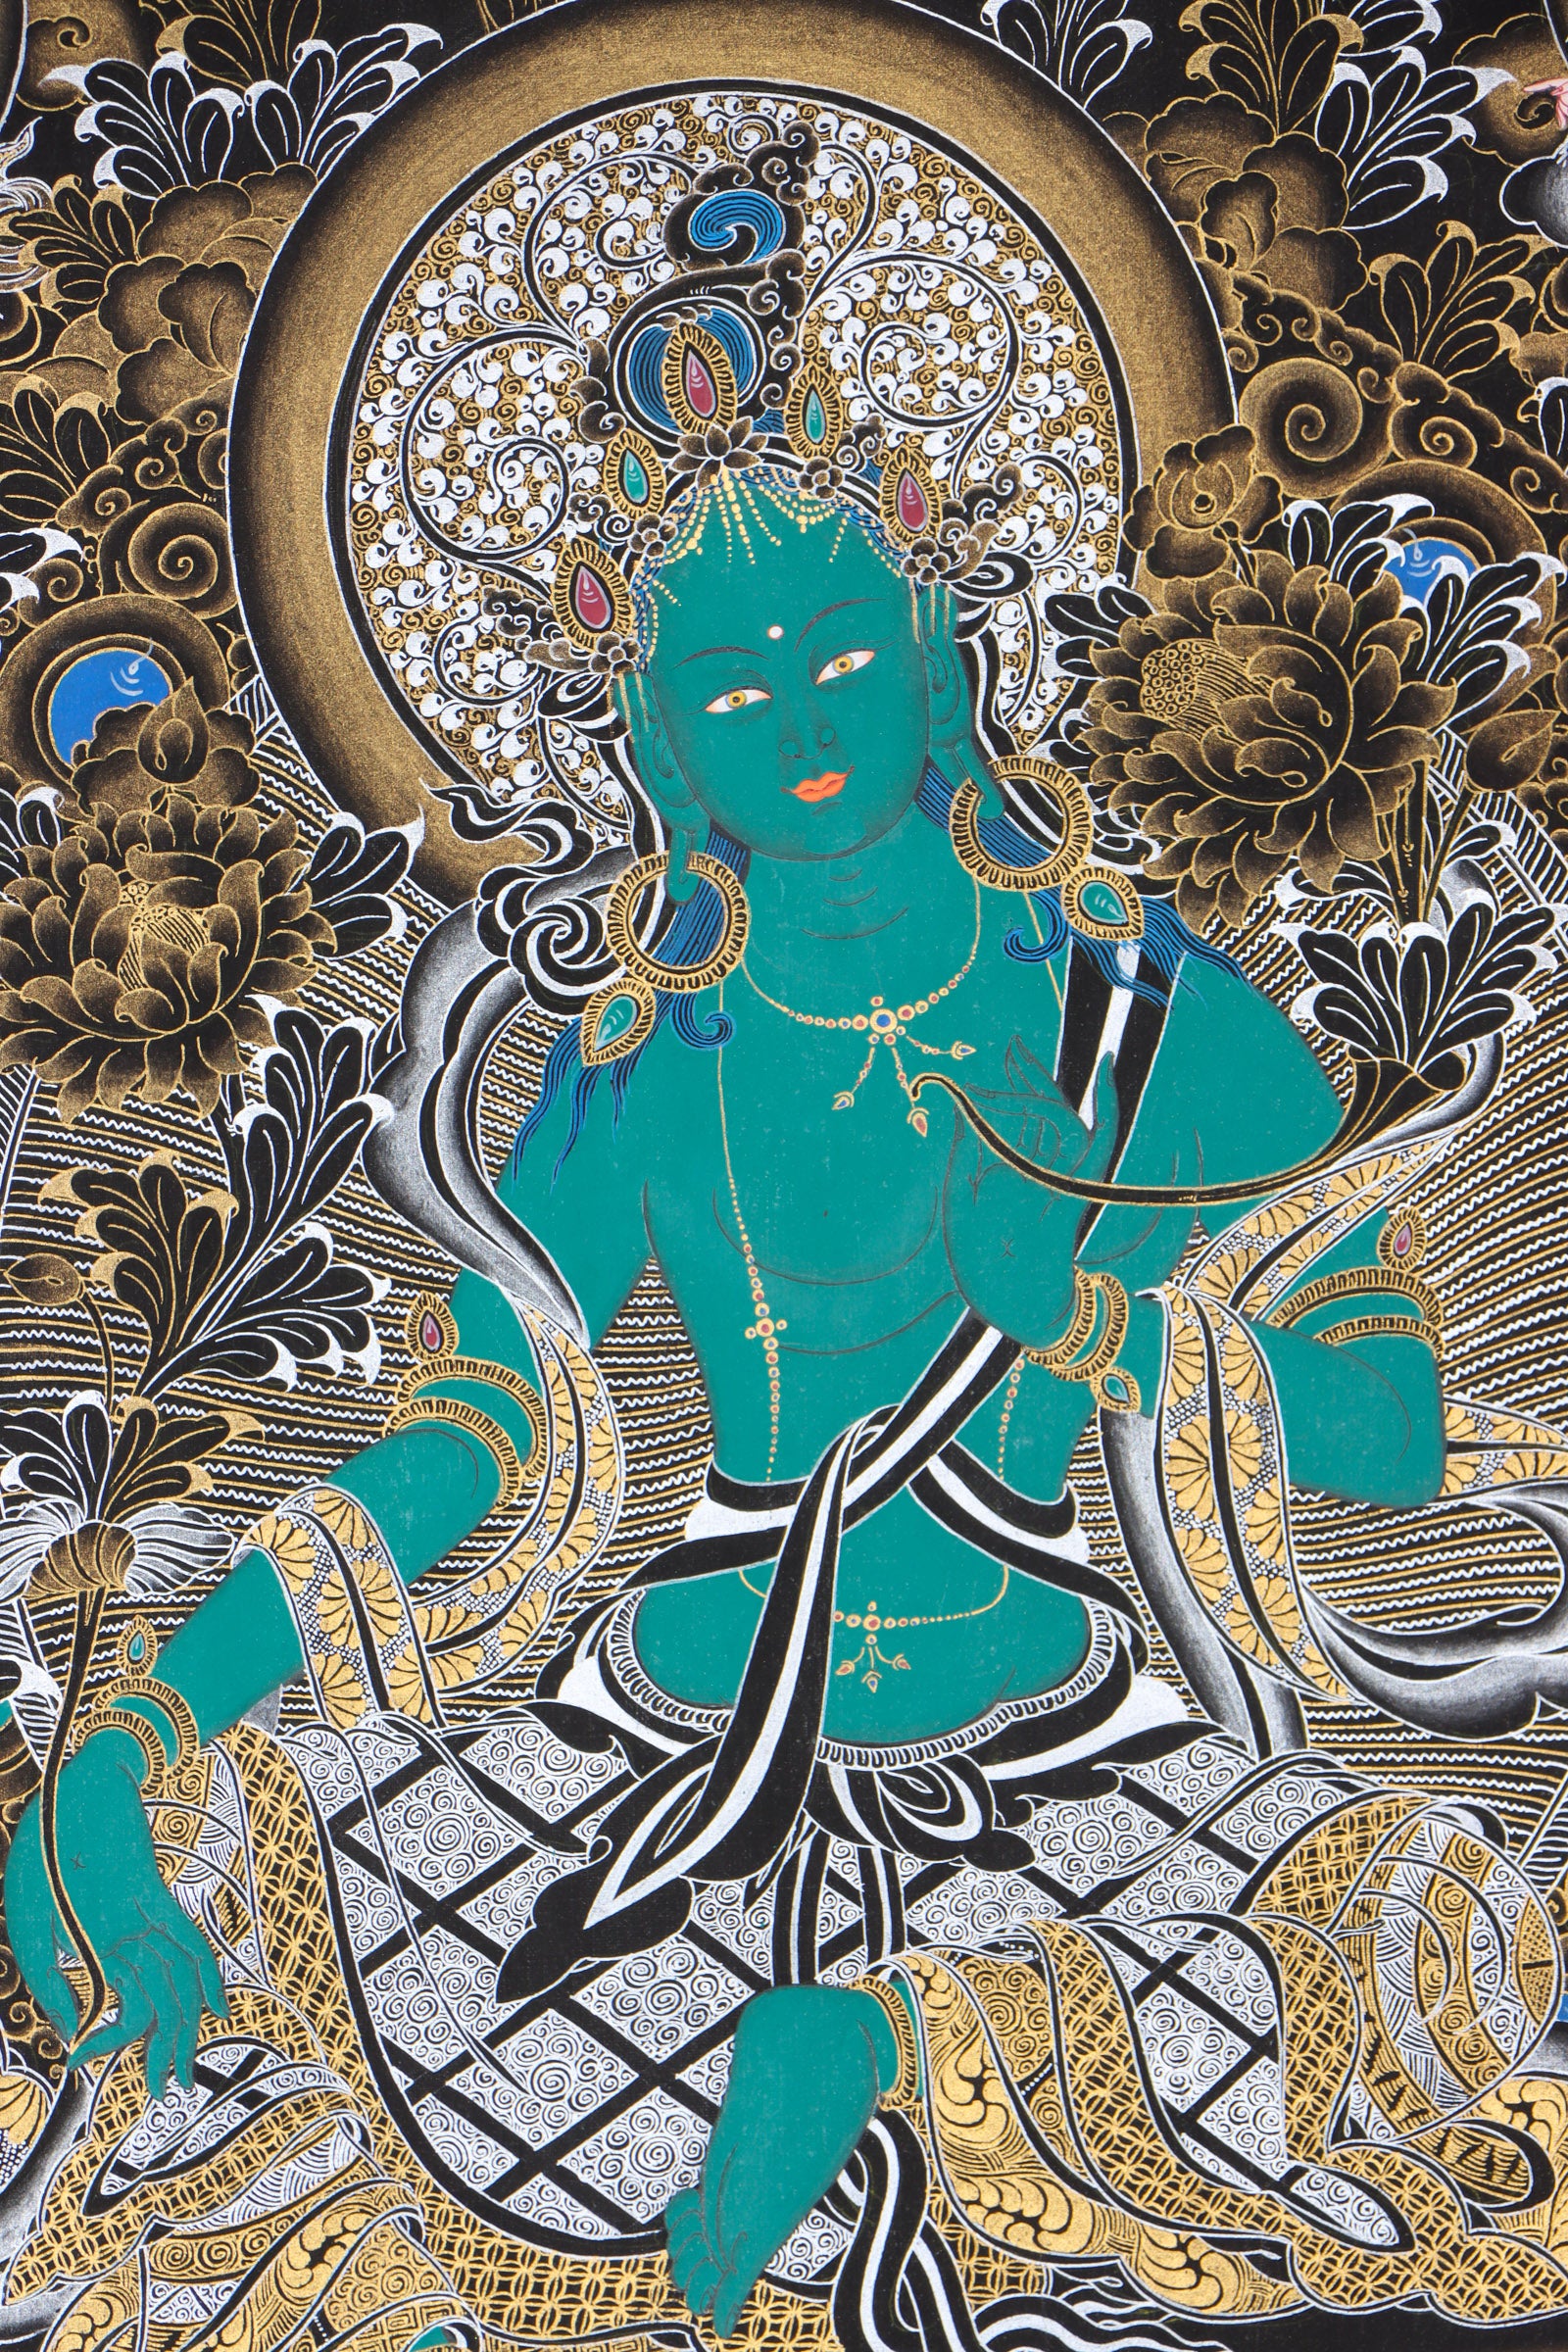 Green Tara Thangka for enlightenment.